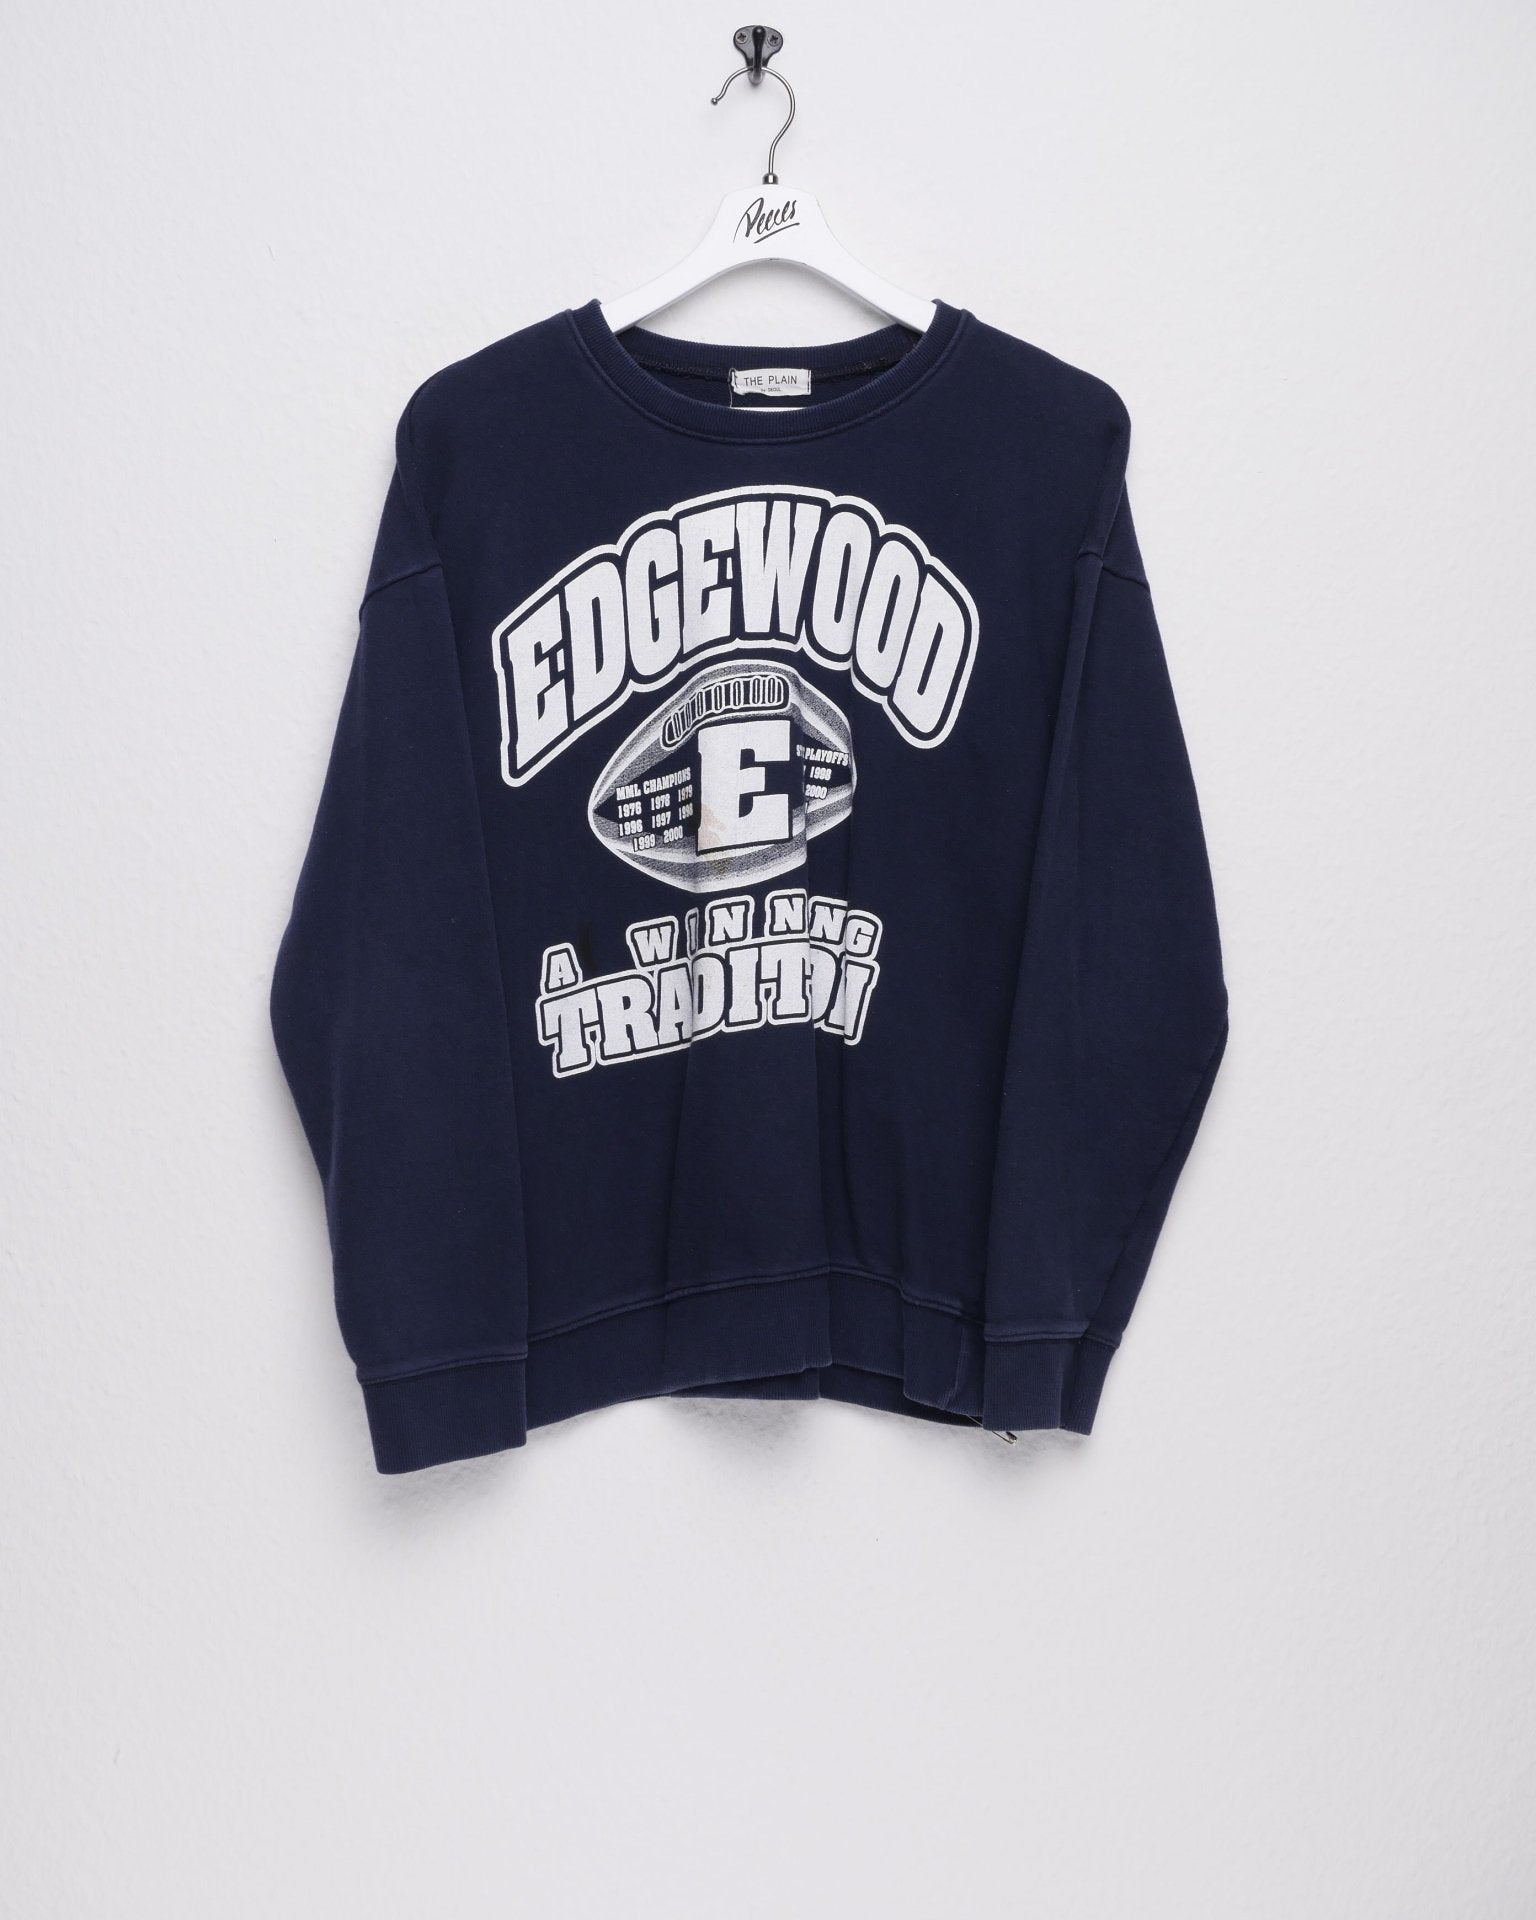 Edgewood printed Grahic Sweater - Peeces